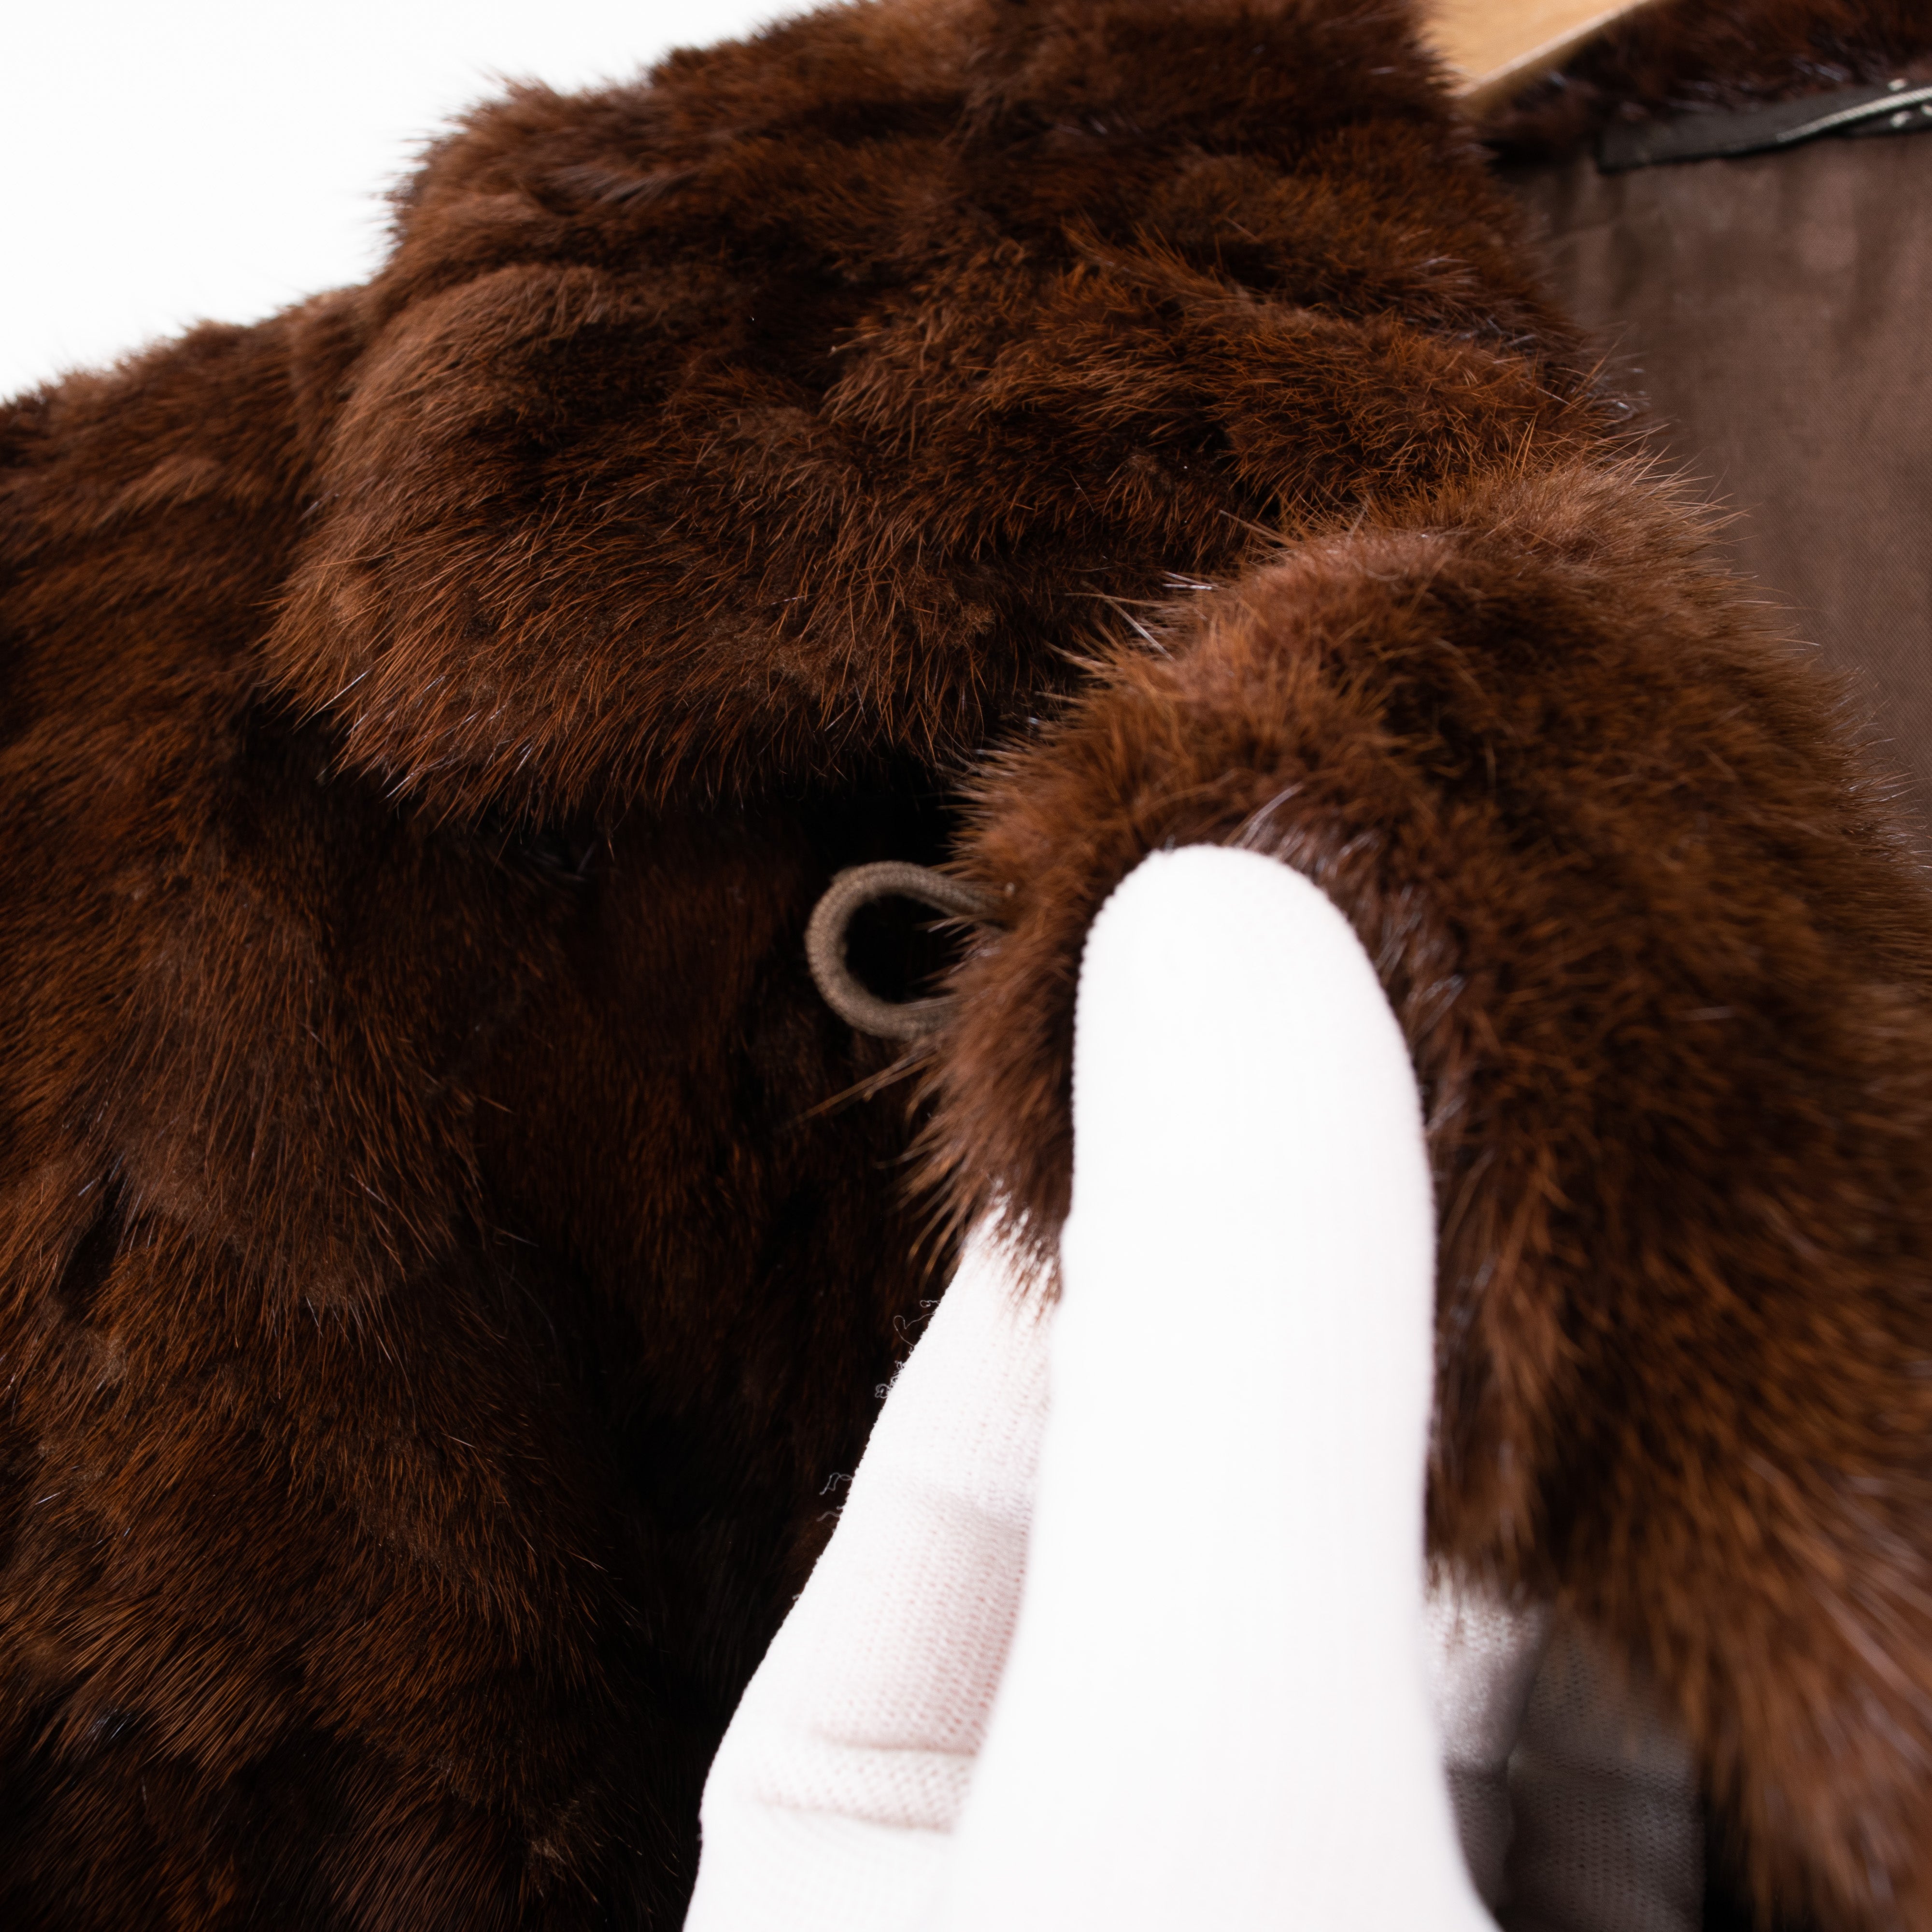 Real Genuine Brown Mink Fur Long Overcoat Women's L